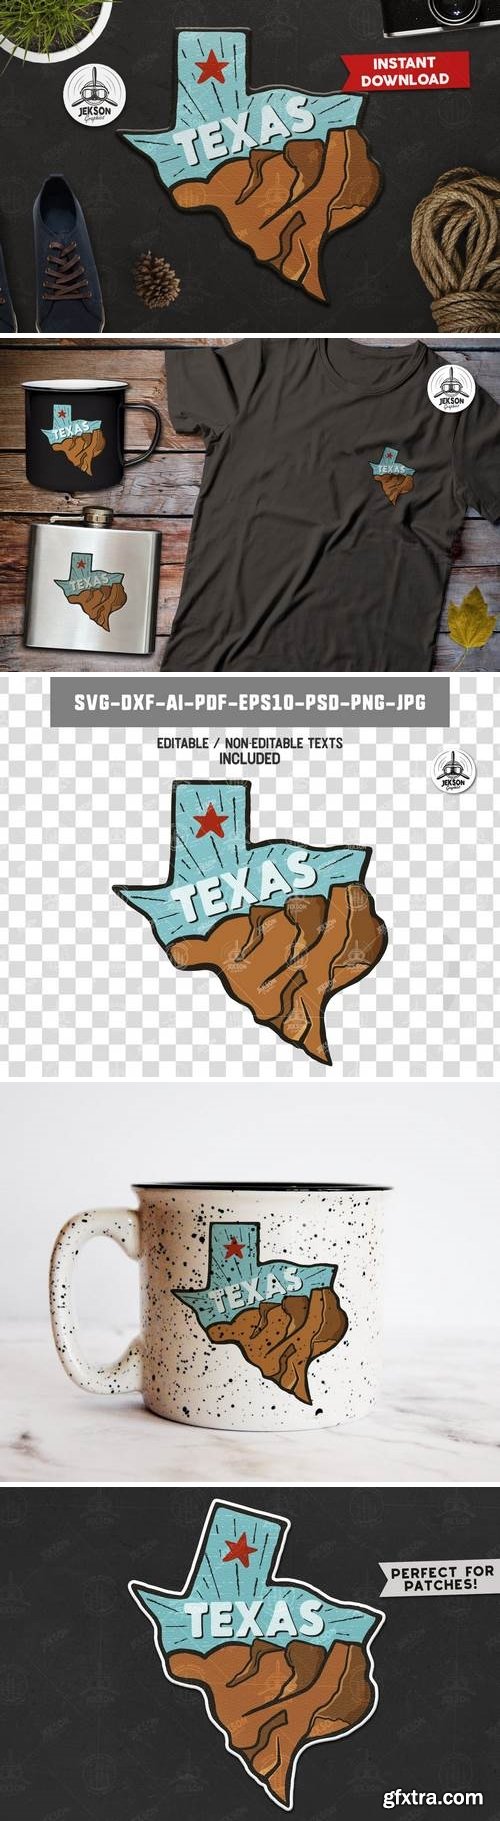 Texas Retro Adventure Badge / Vintage Travel Logo